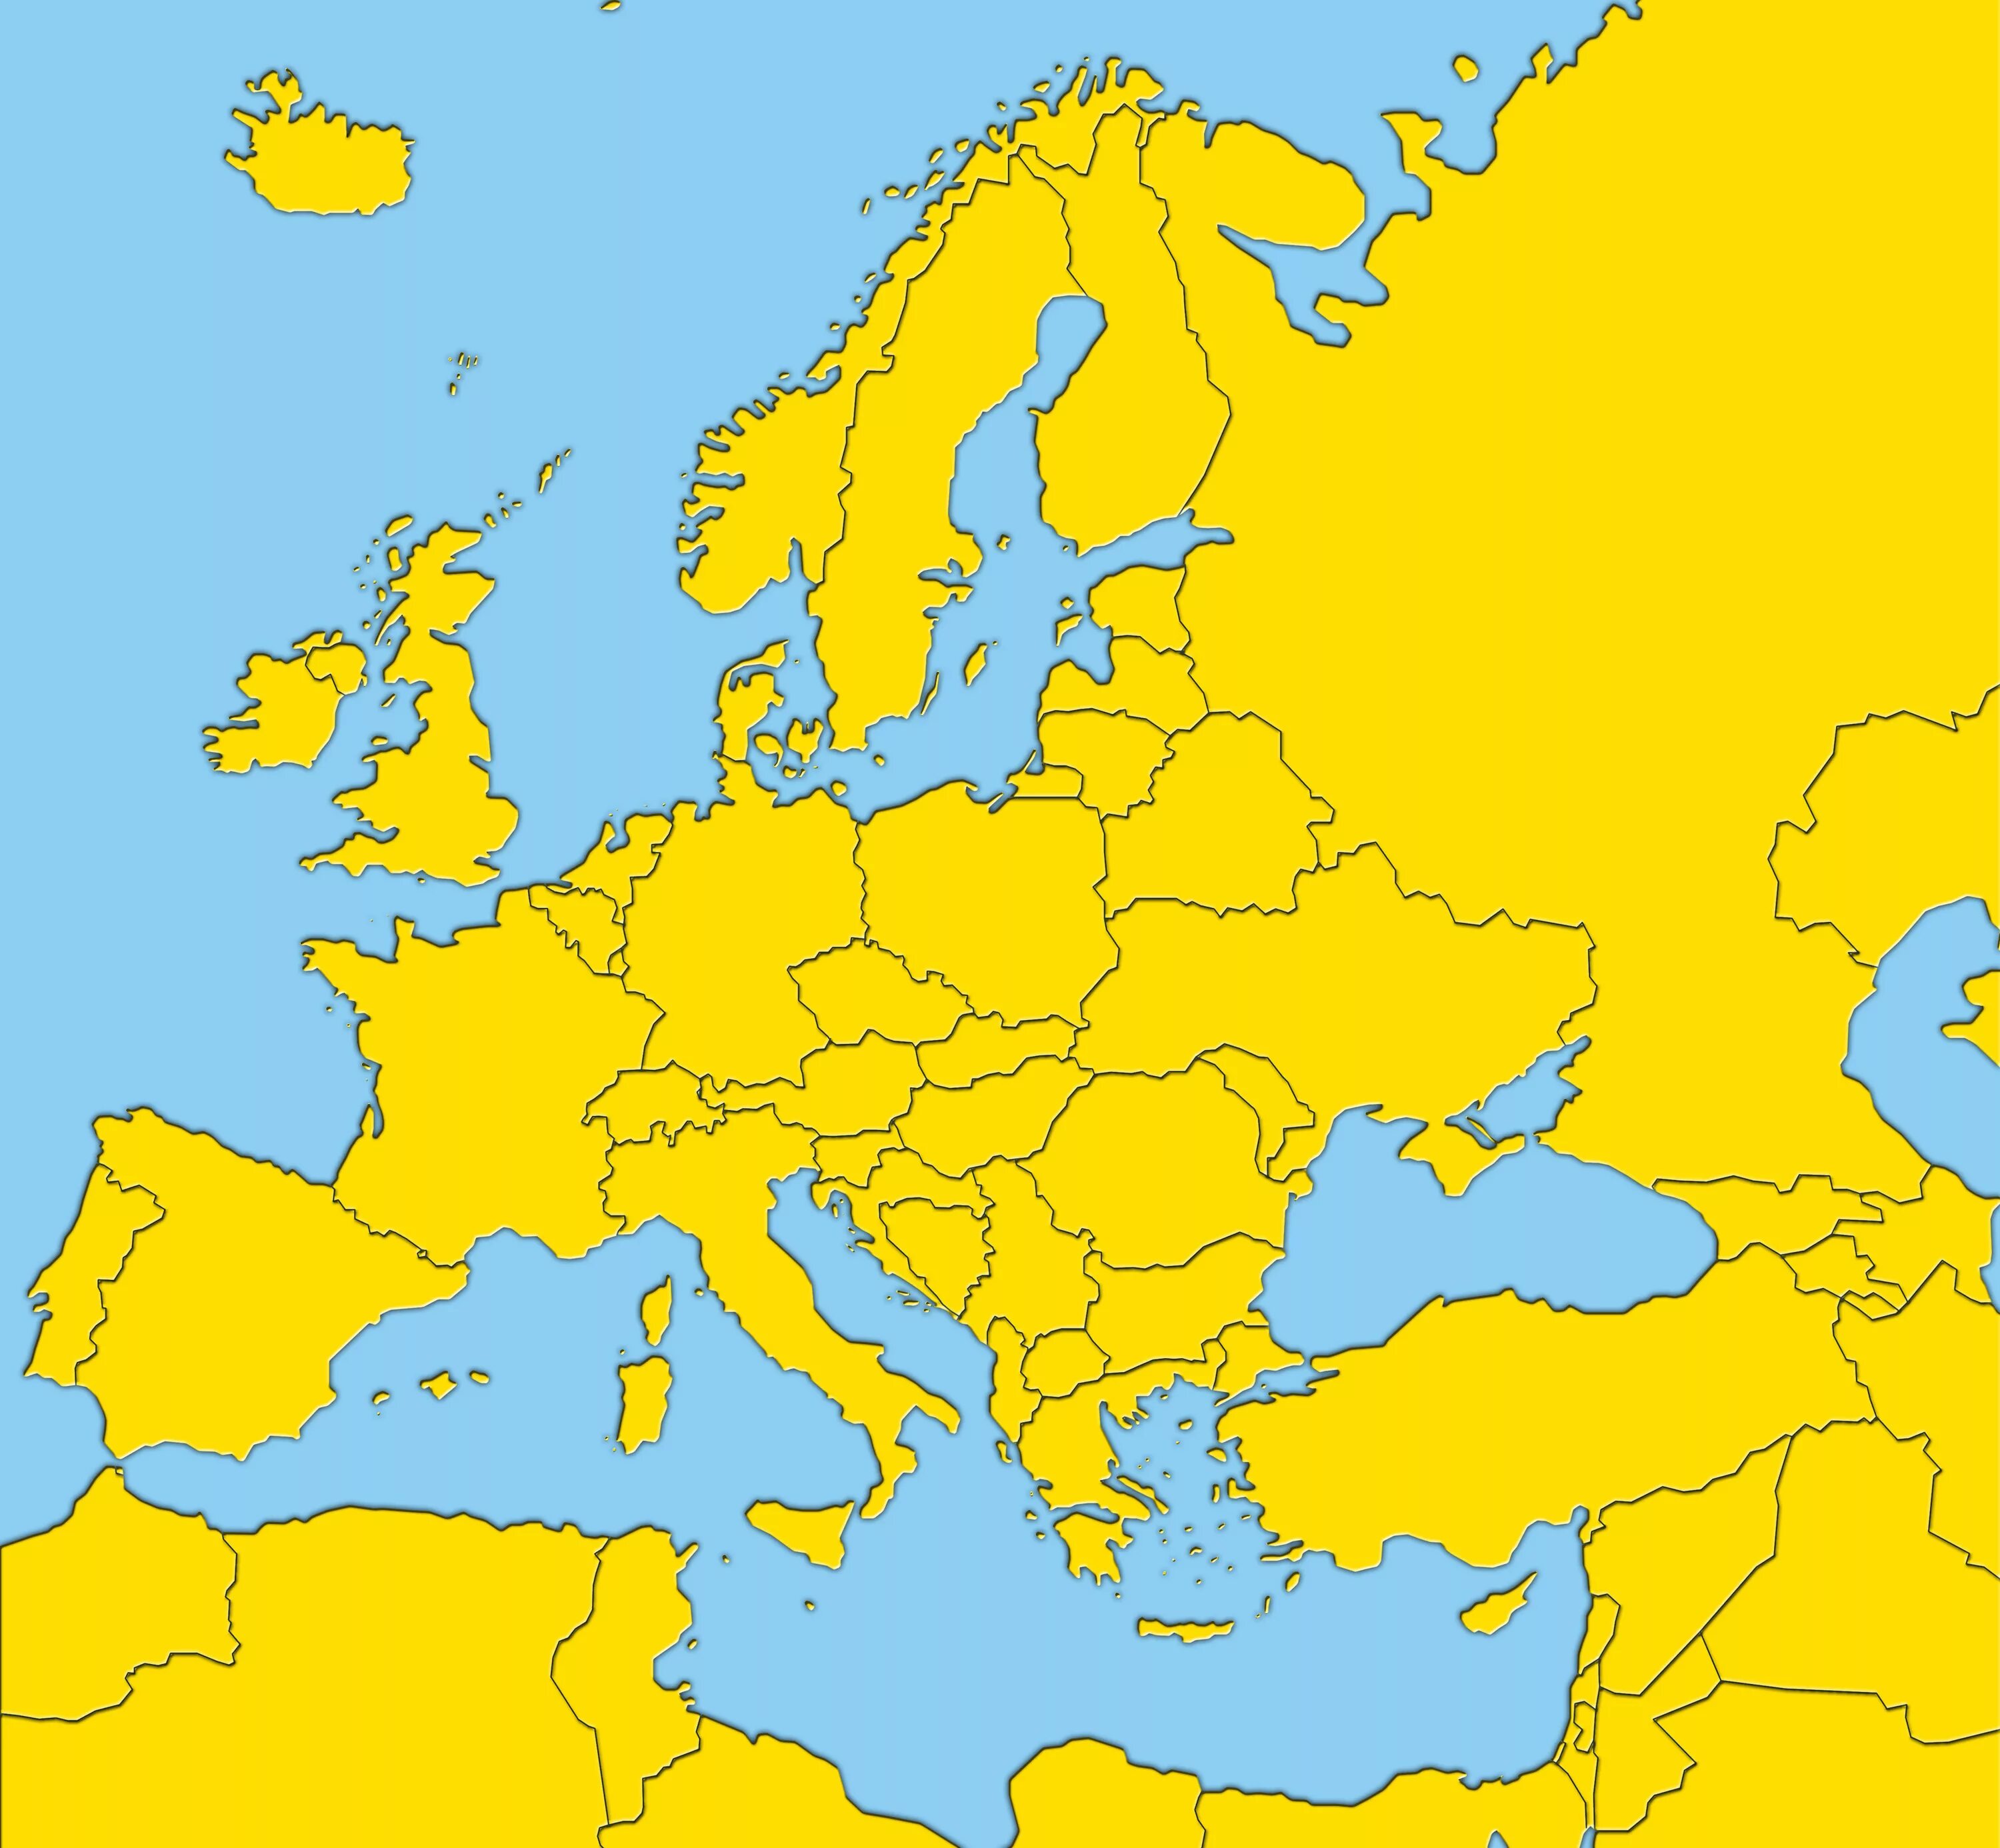 Europa de. Карта - Европа. Границы Европы. Европа без стран. Карта Европы с границами.